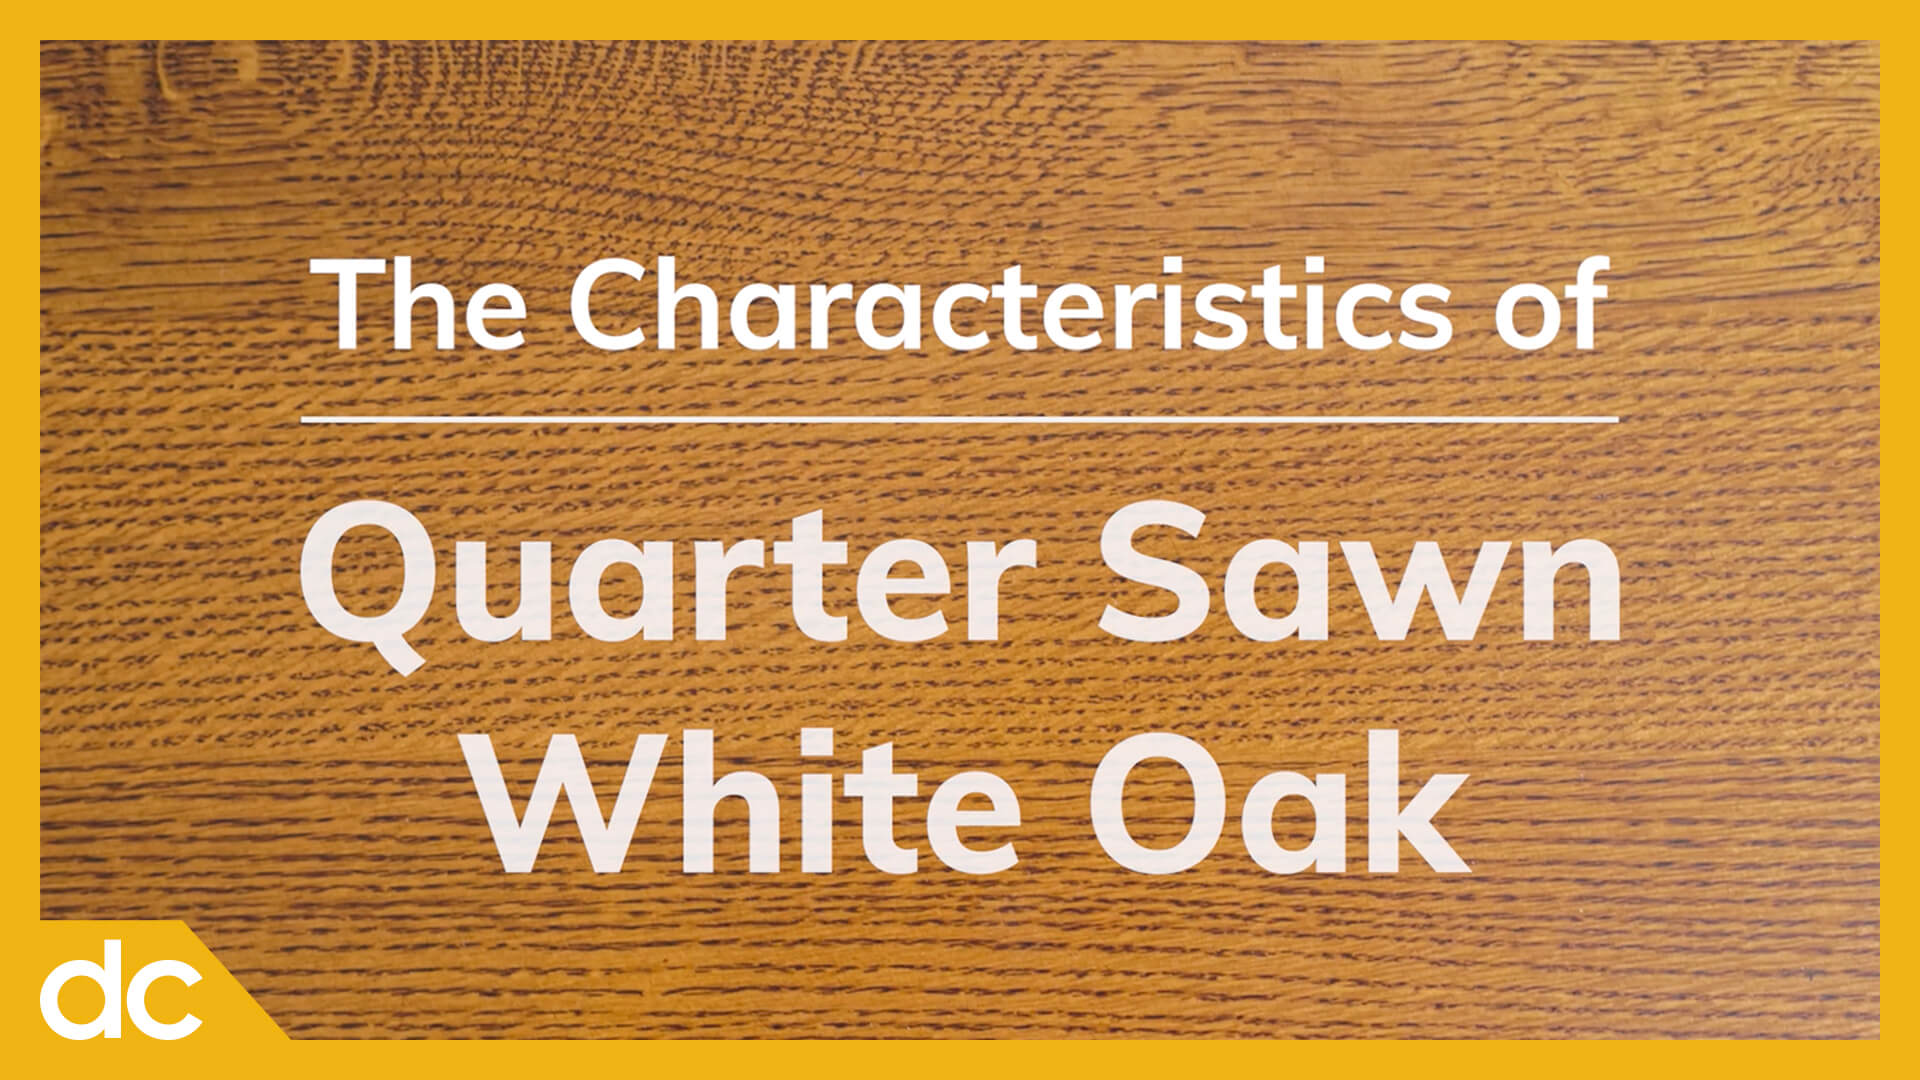 The Characteristics of Quarter Sawn White Oak video title